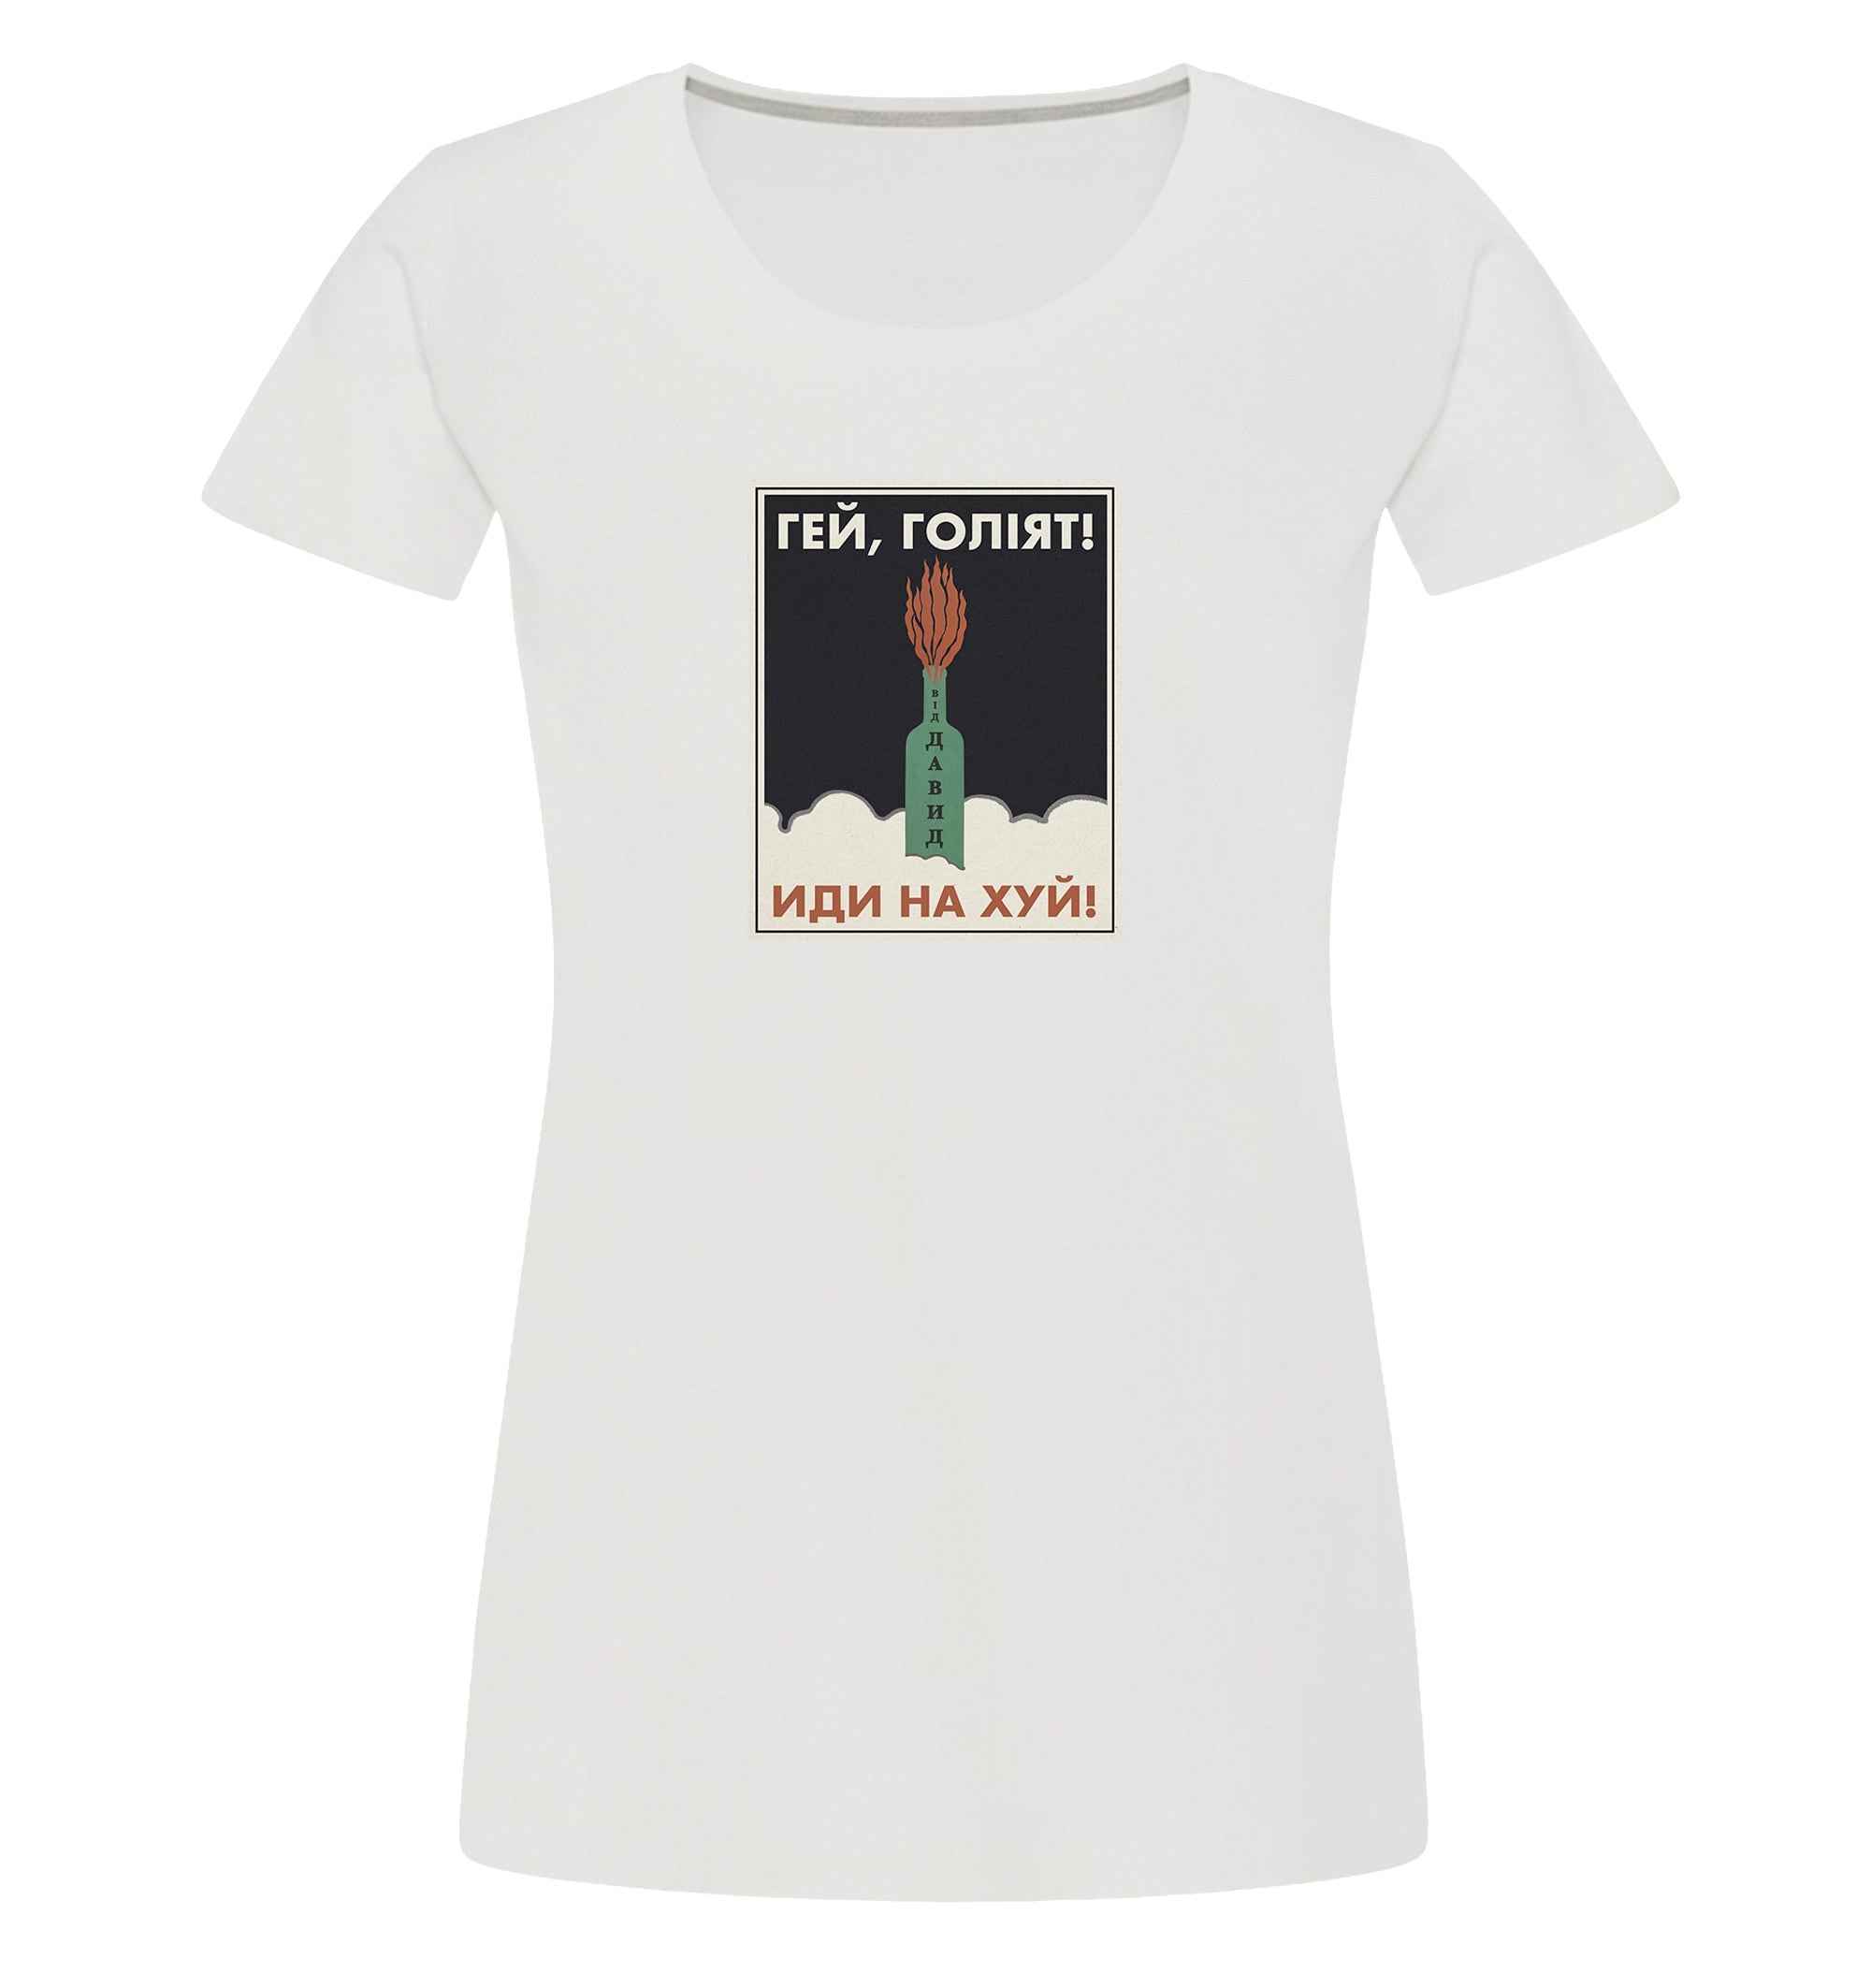 Mazel Tov Cocktail - Premium - Women's Classic T-Shirt